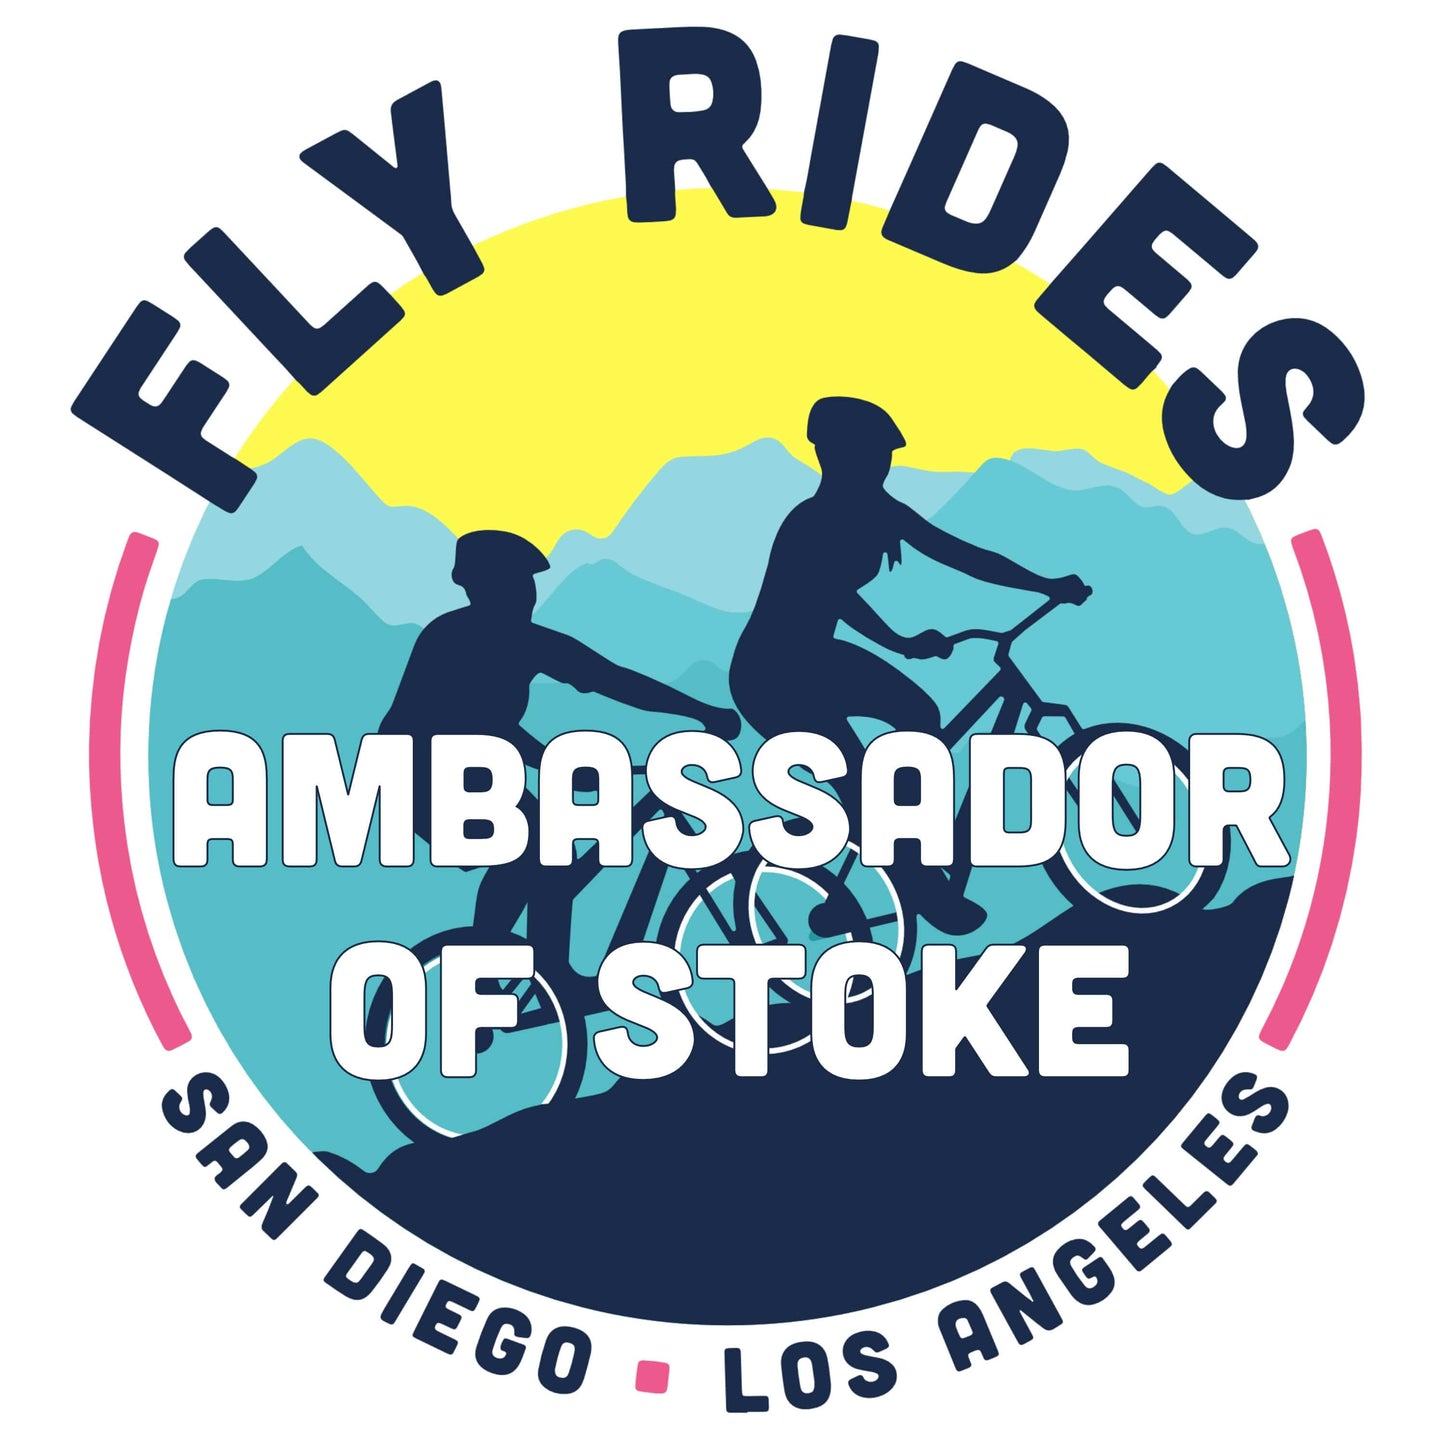 Fly Rides "Share the Stoke!" Ambassador Rebate for eMTBs